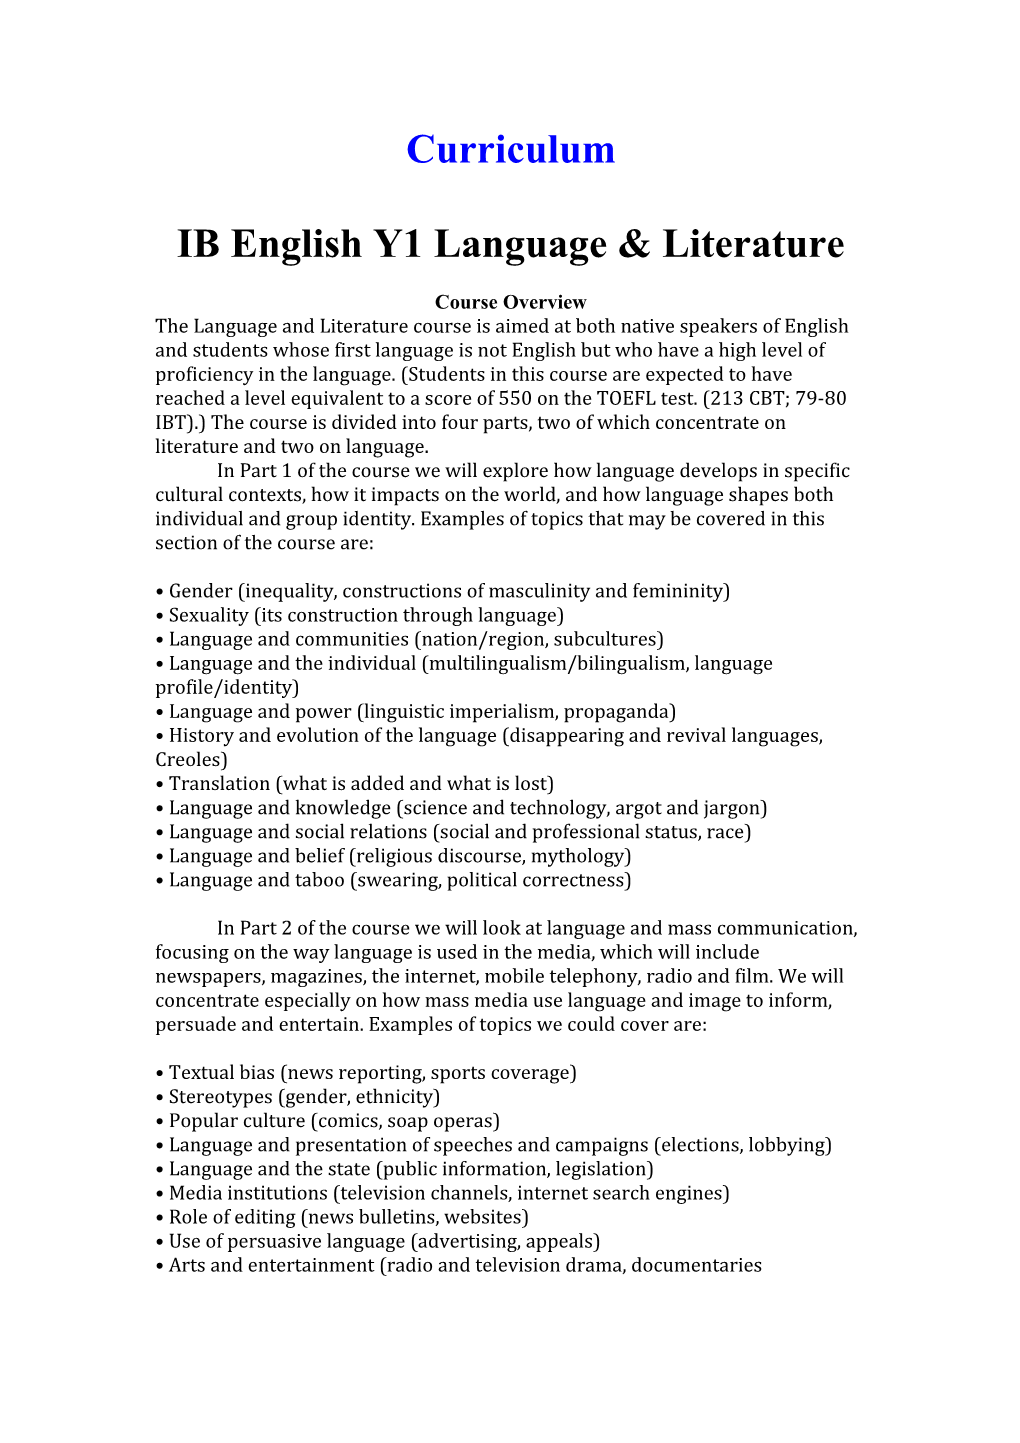 IB English Y1 Language & Literature